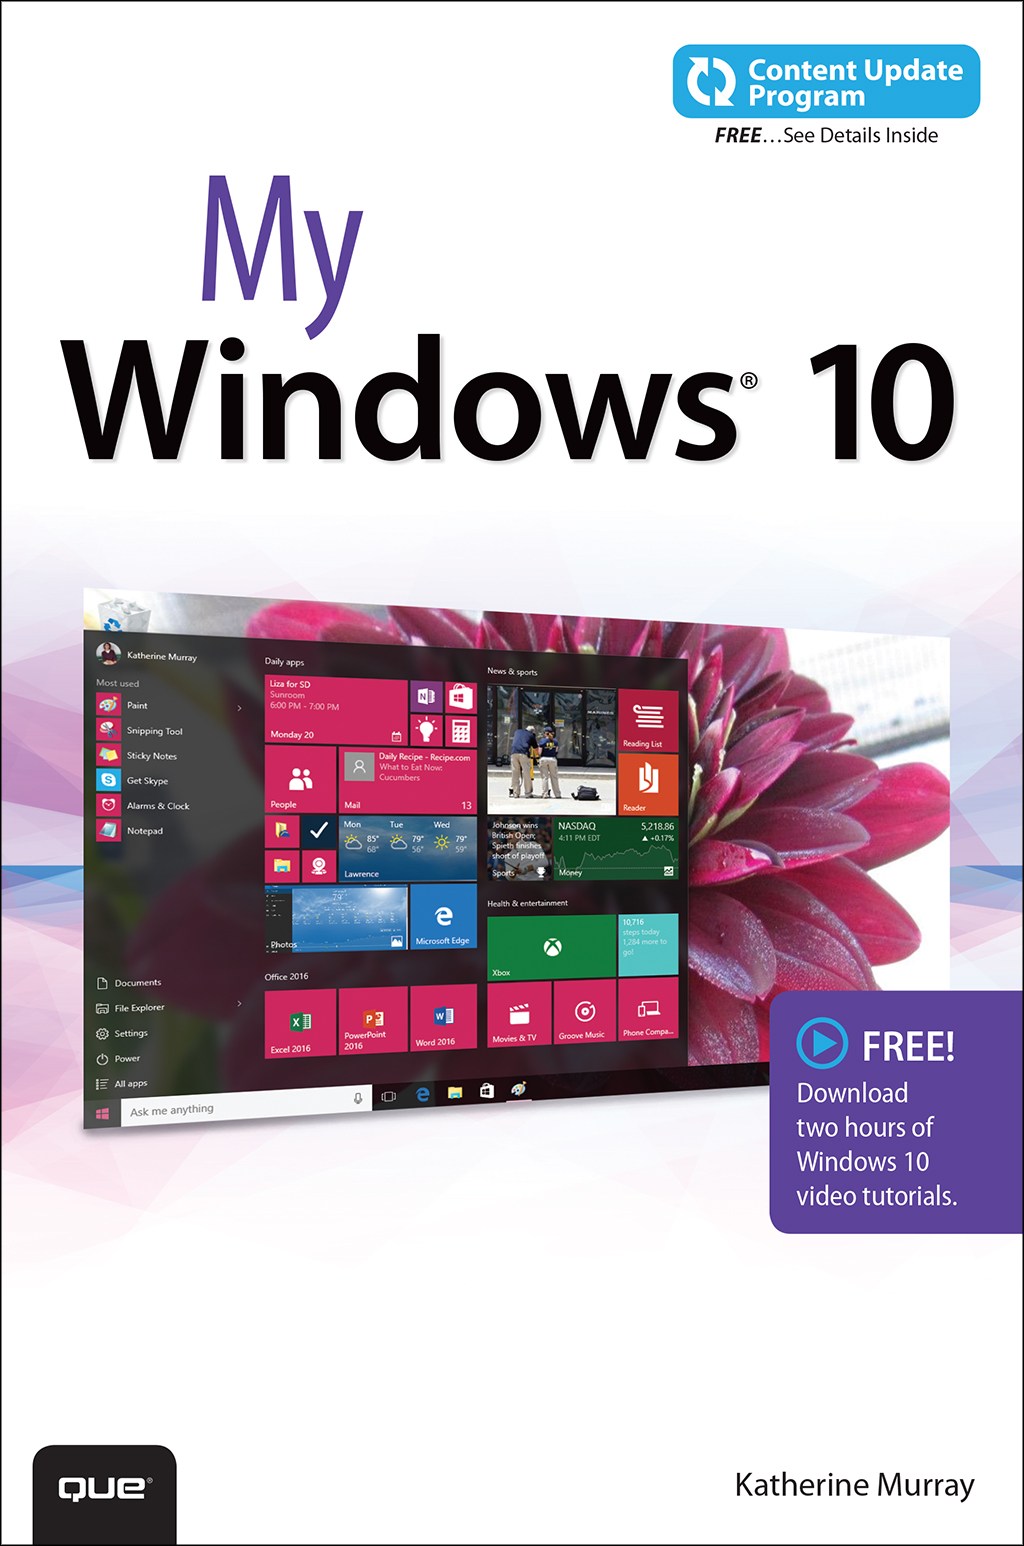 Windows 10 Guide - Microsoft Win 10 Tutorial